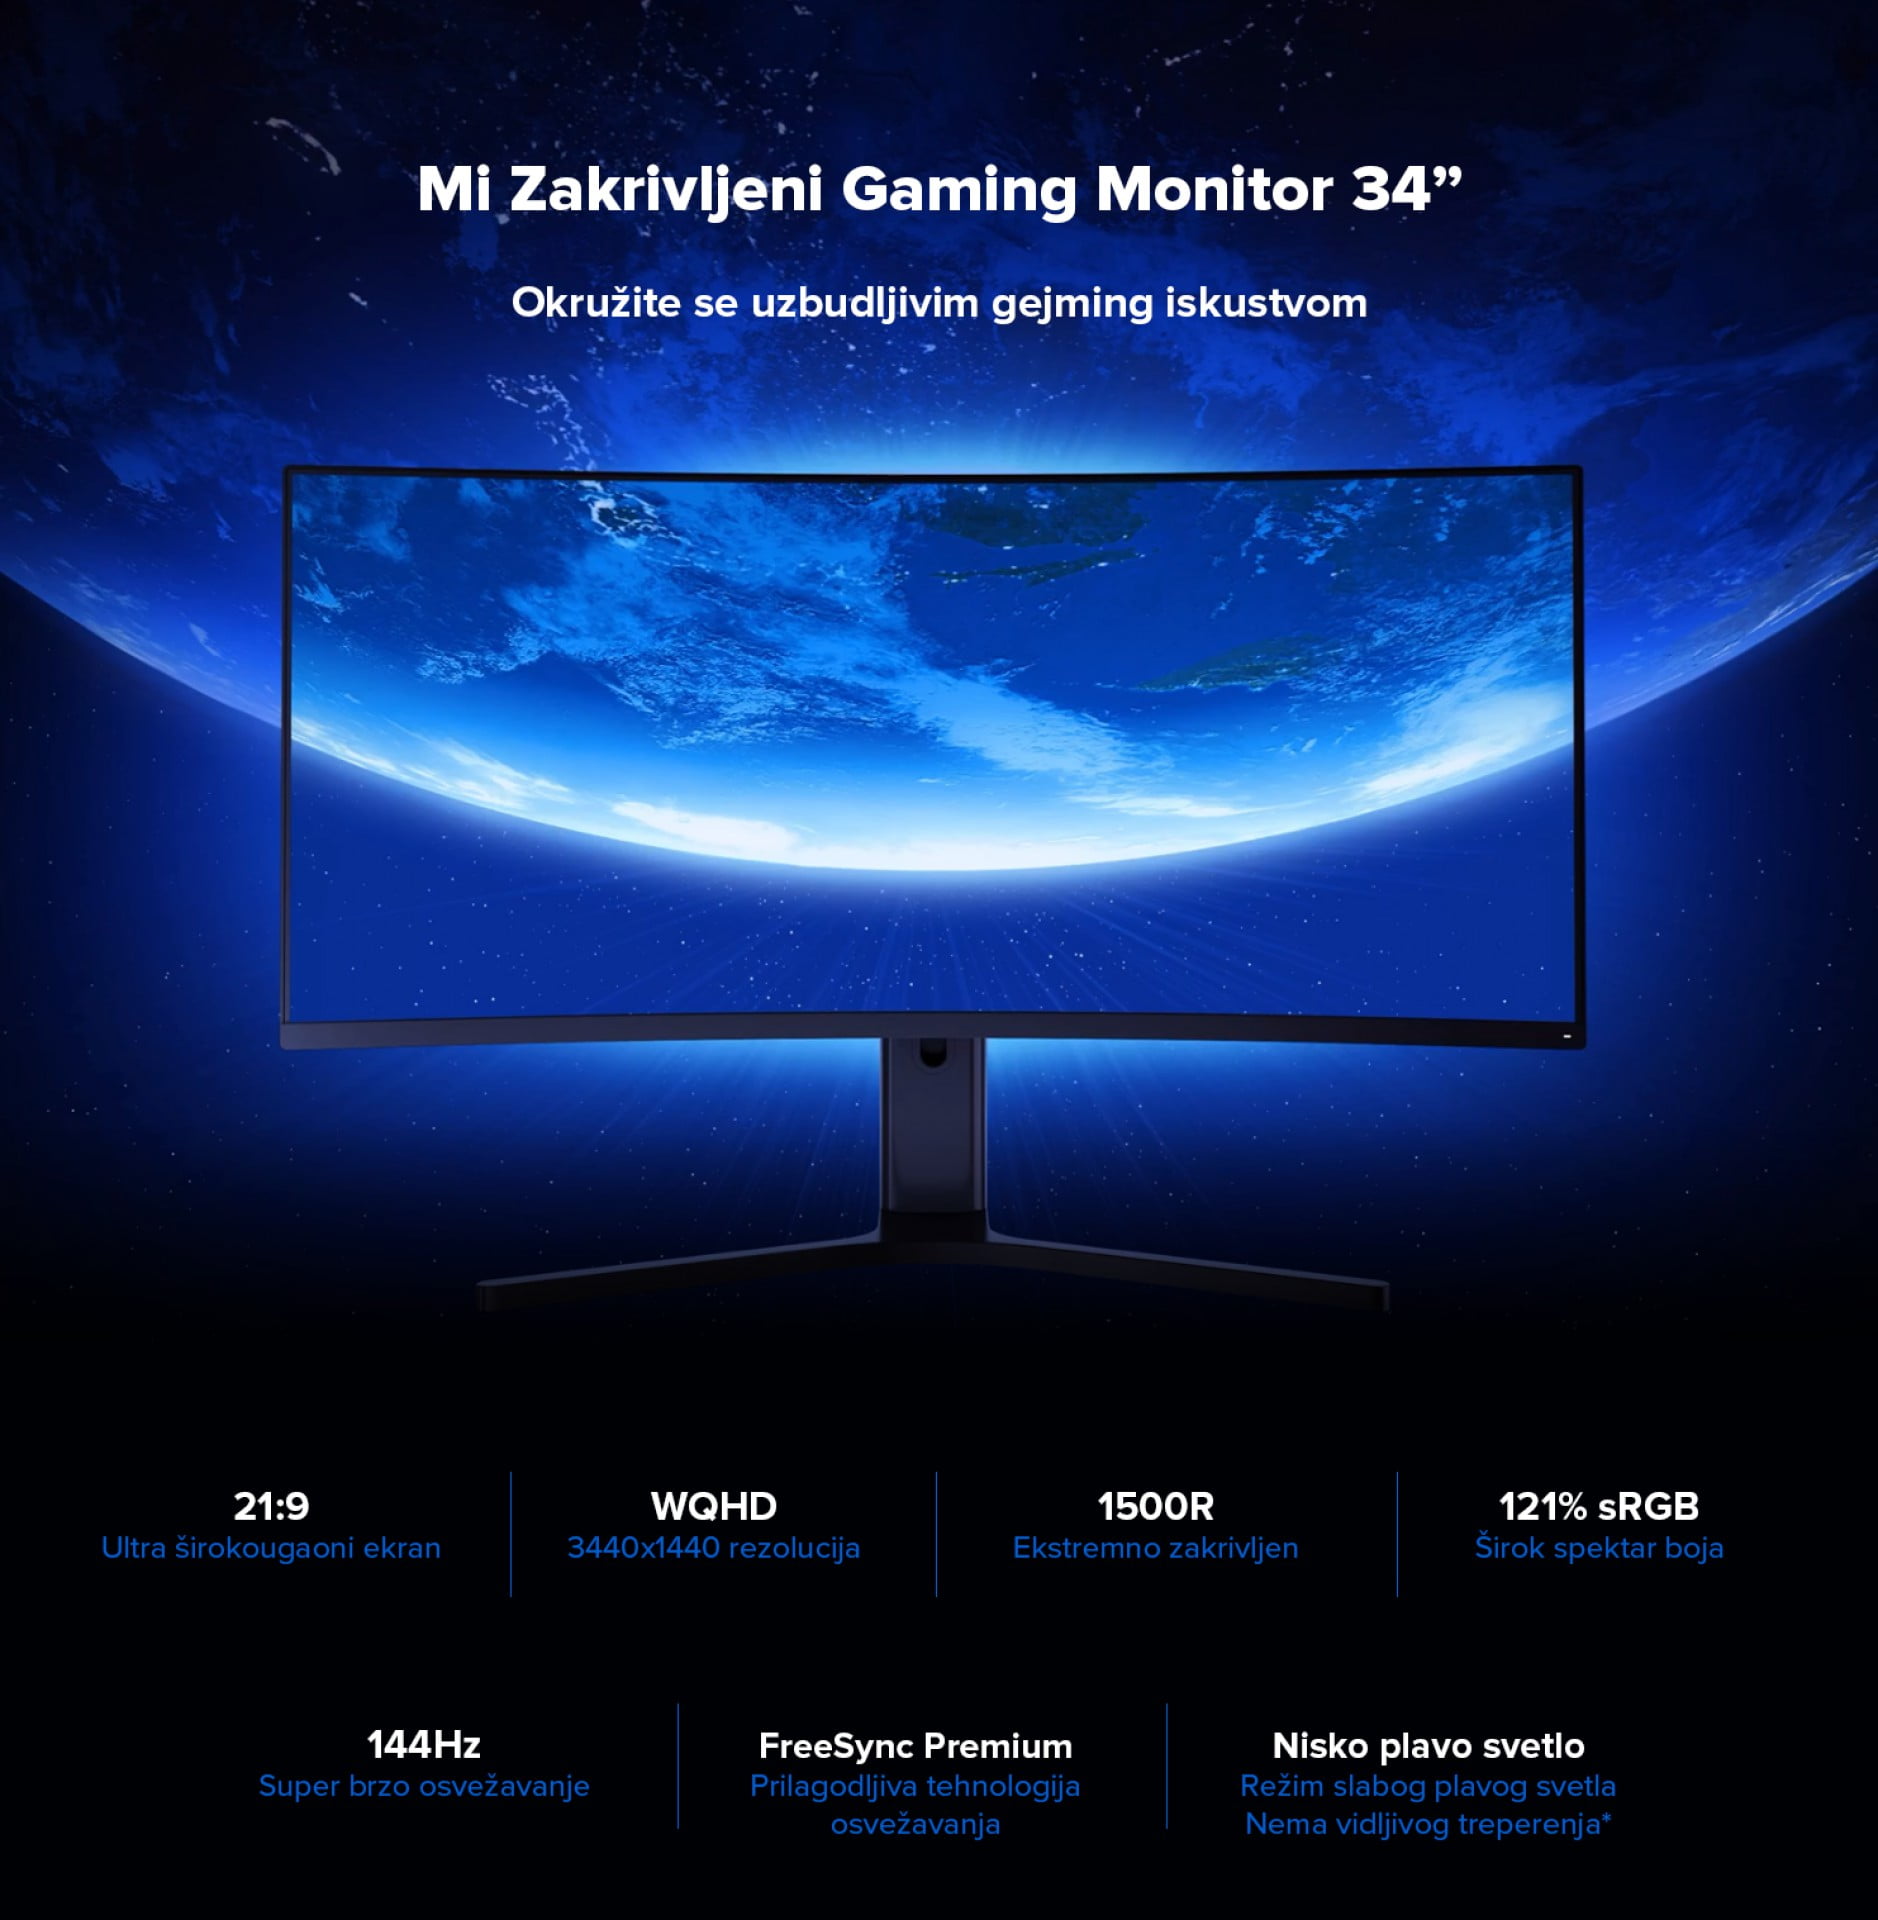 Mi Zakrivljeni Gaming monitor 34”